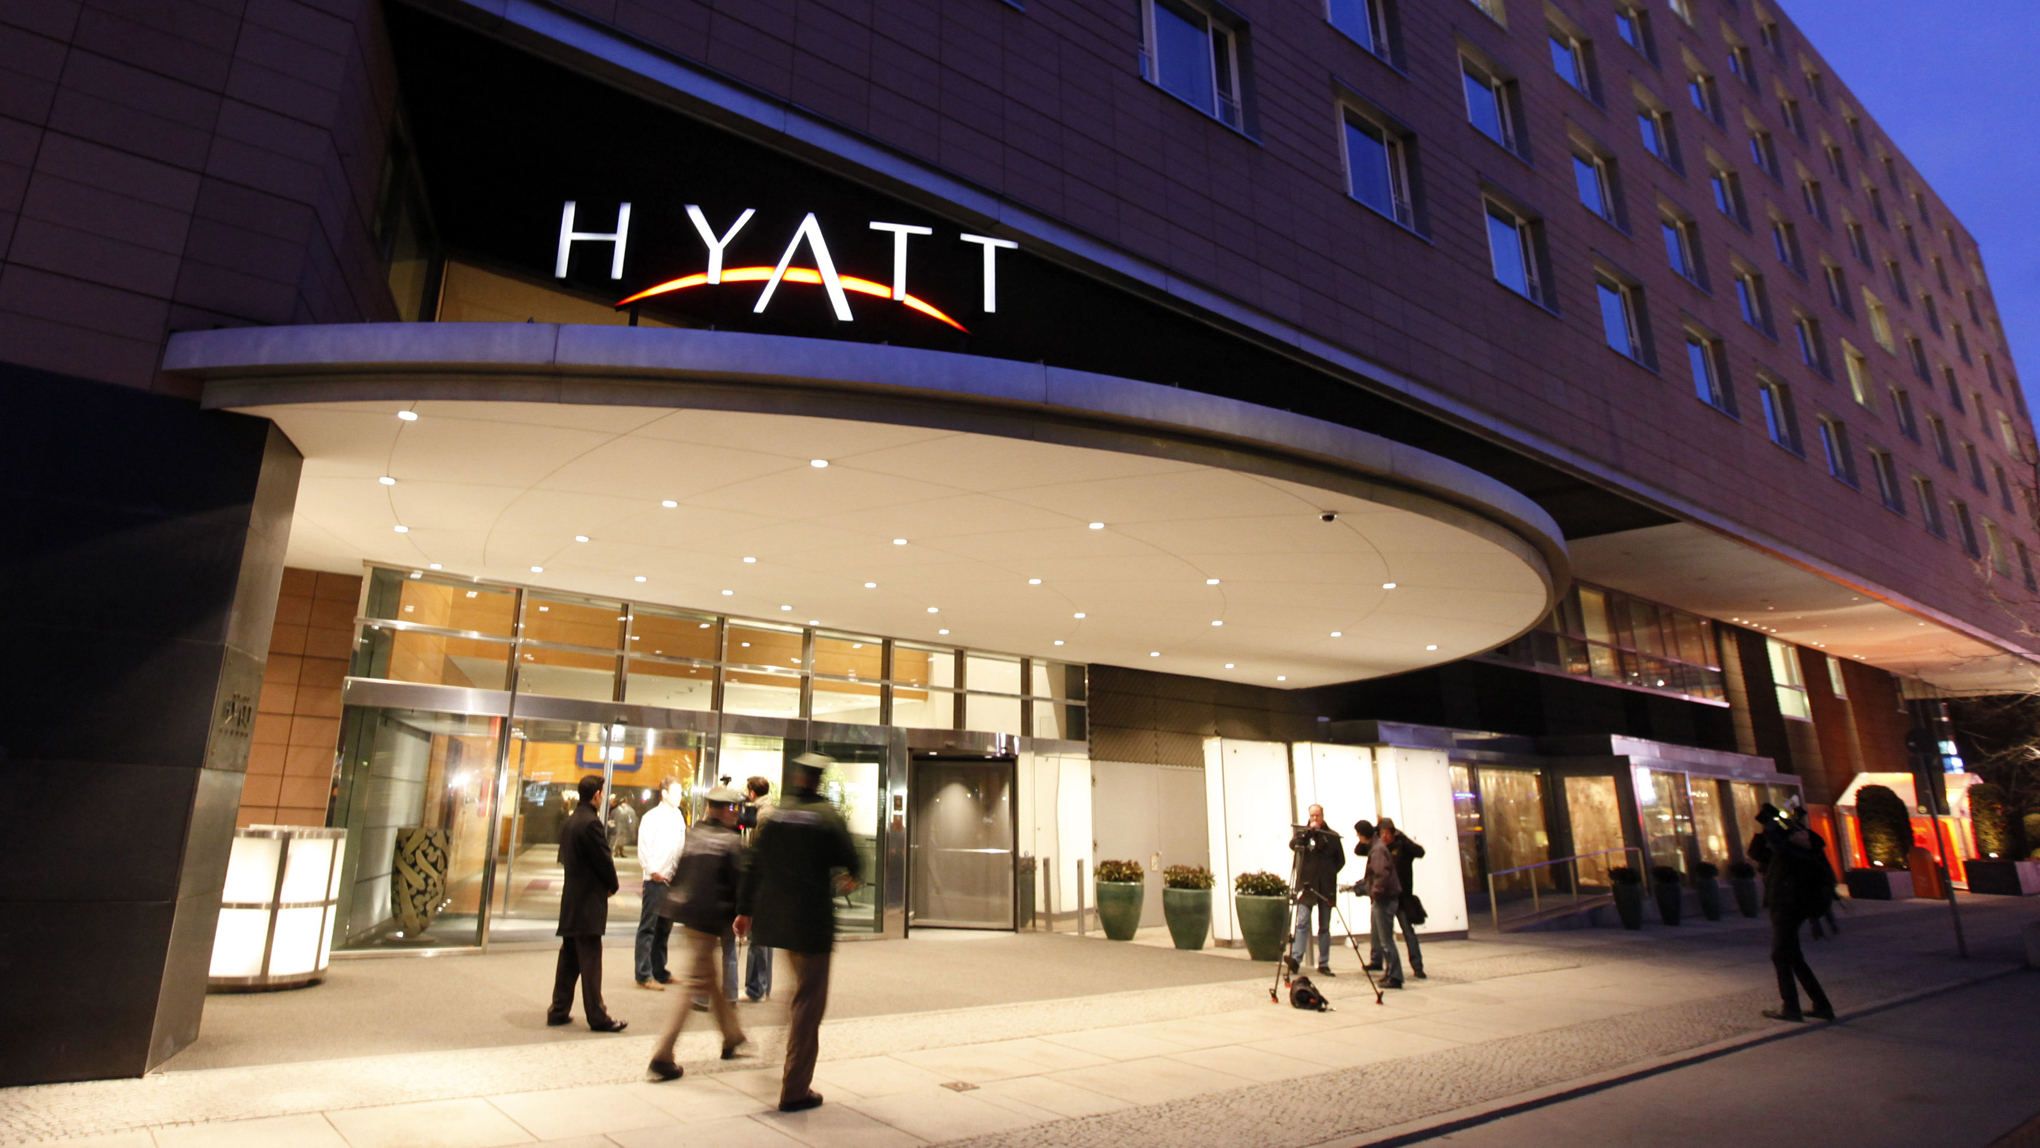 First Hyatt Hotel In Saint Lucia - Plans Announced